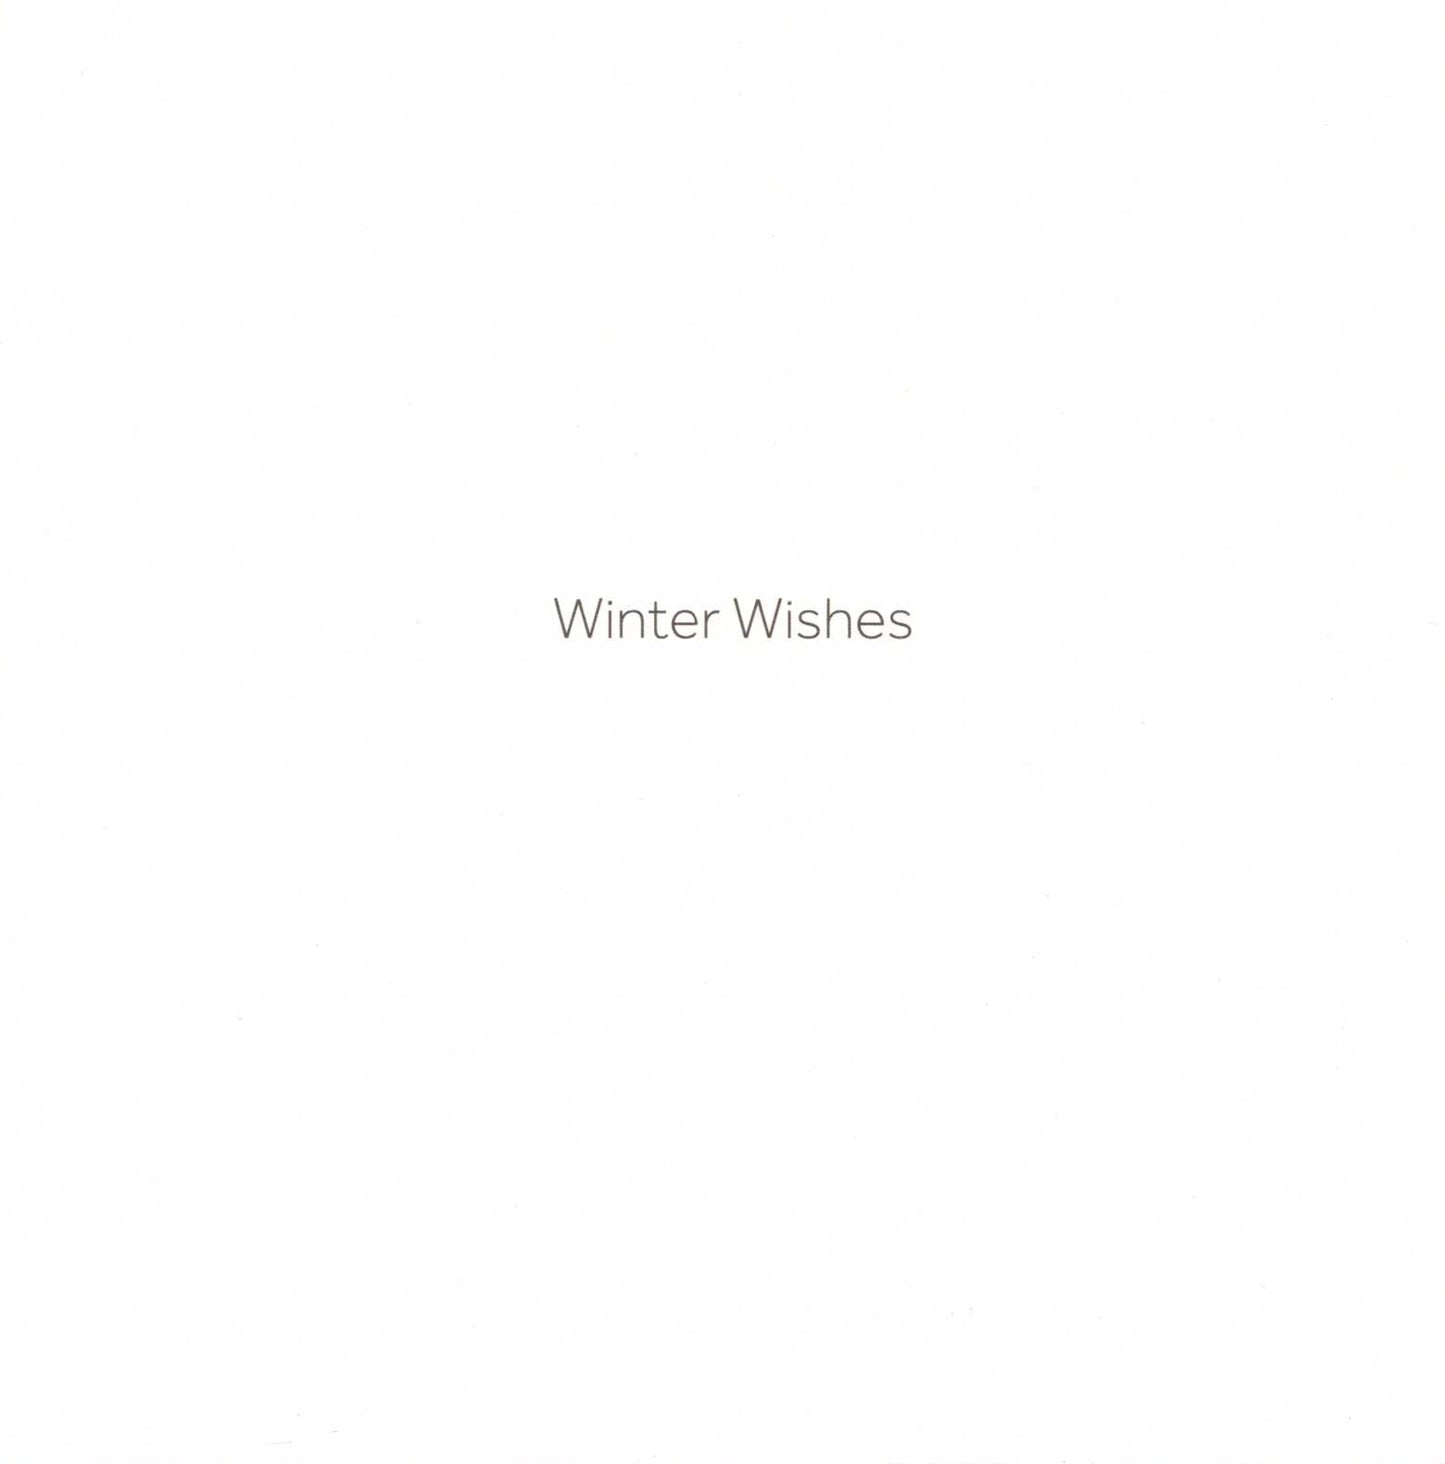 Box of 15 Almanac Winter Robin & Hare Christmas Cards In 3 Designs